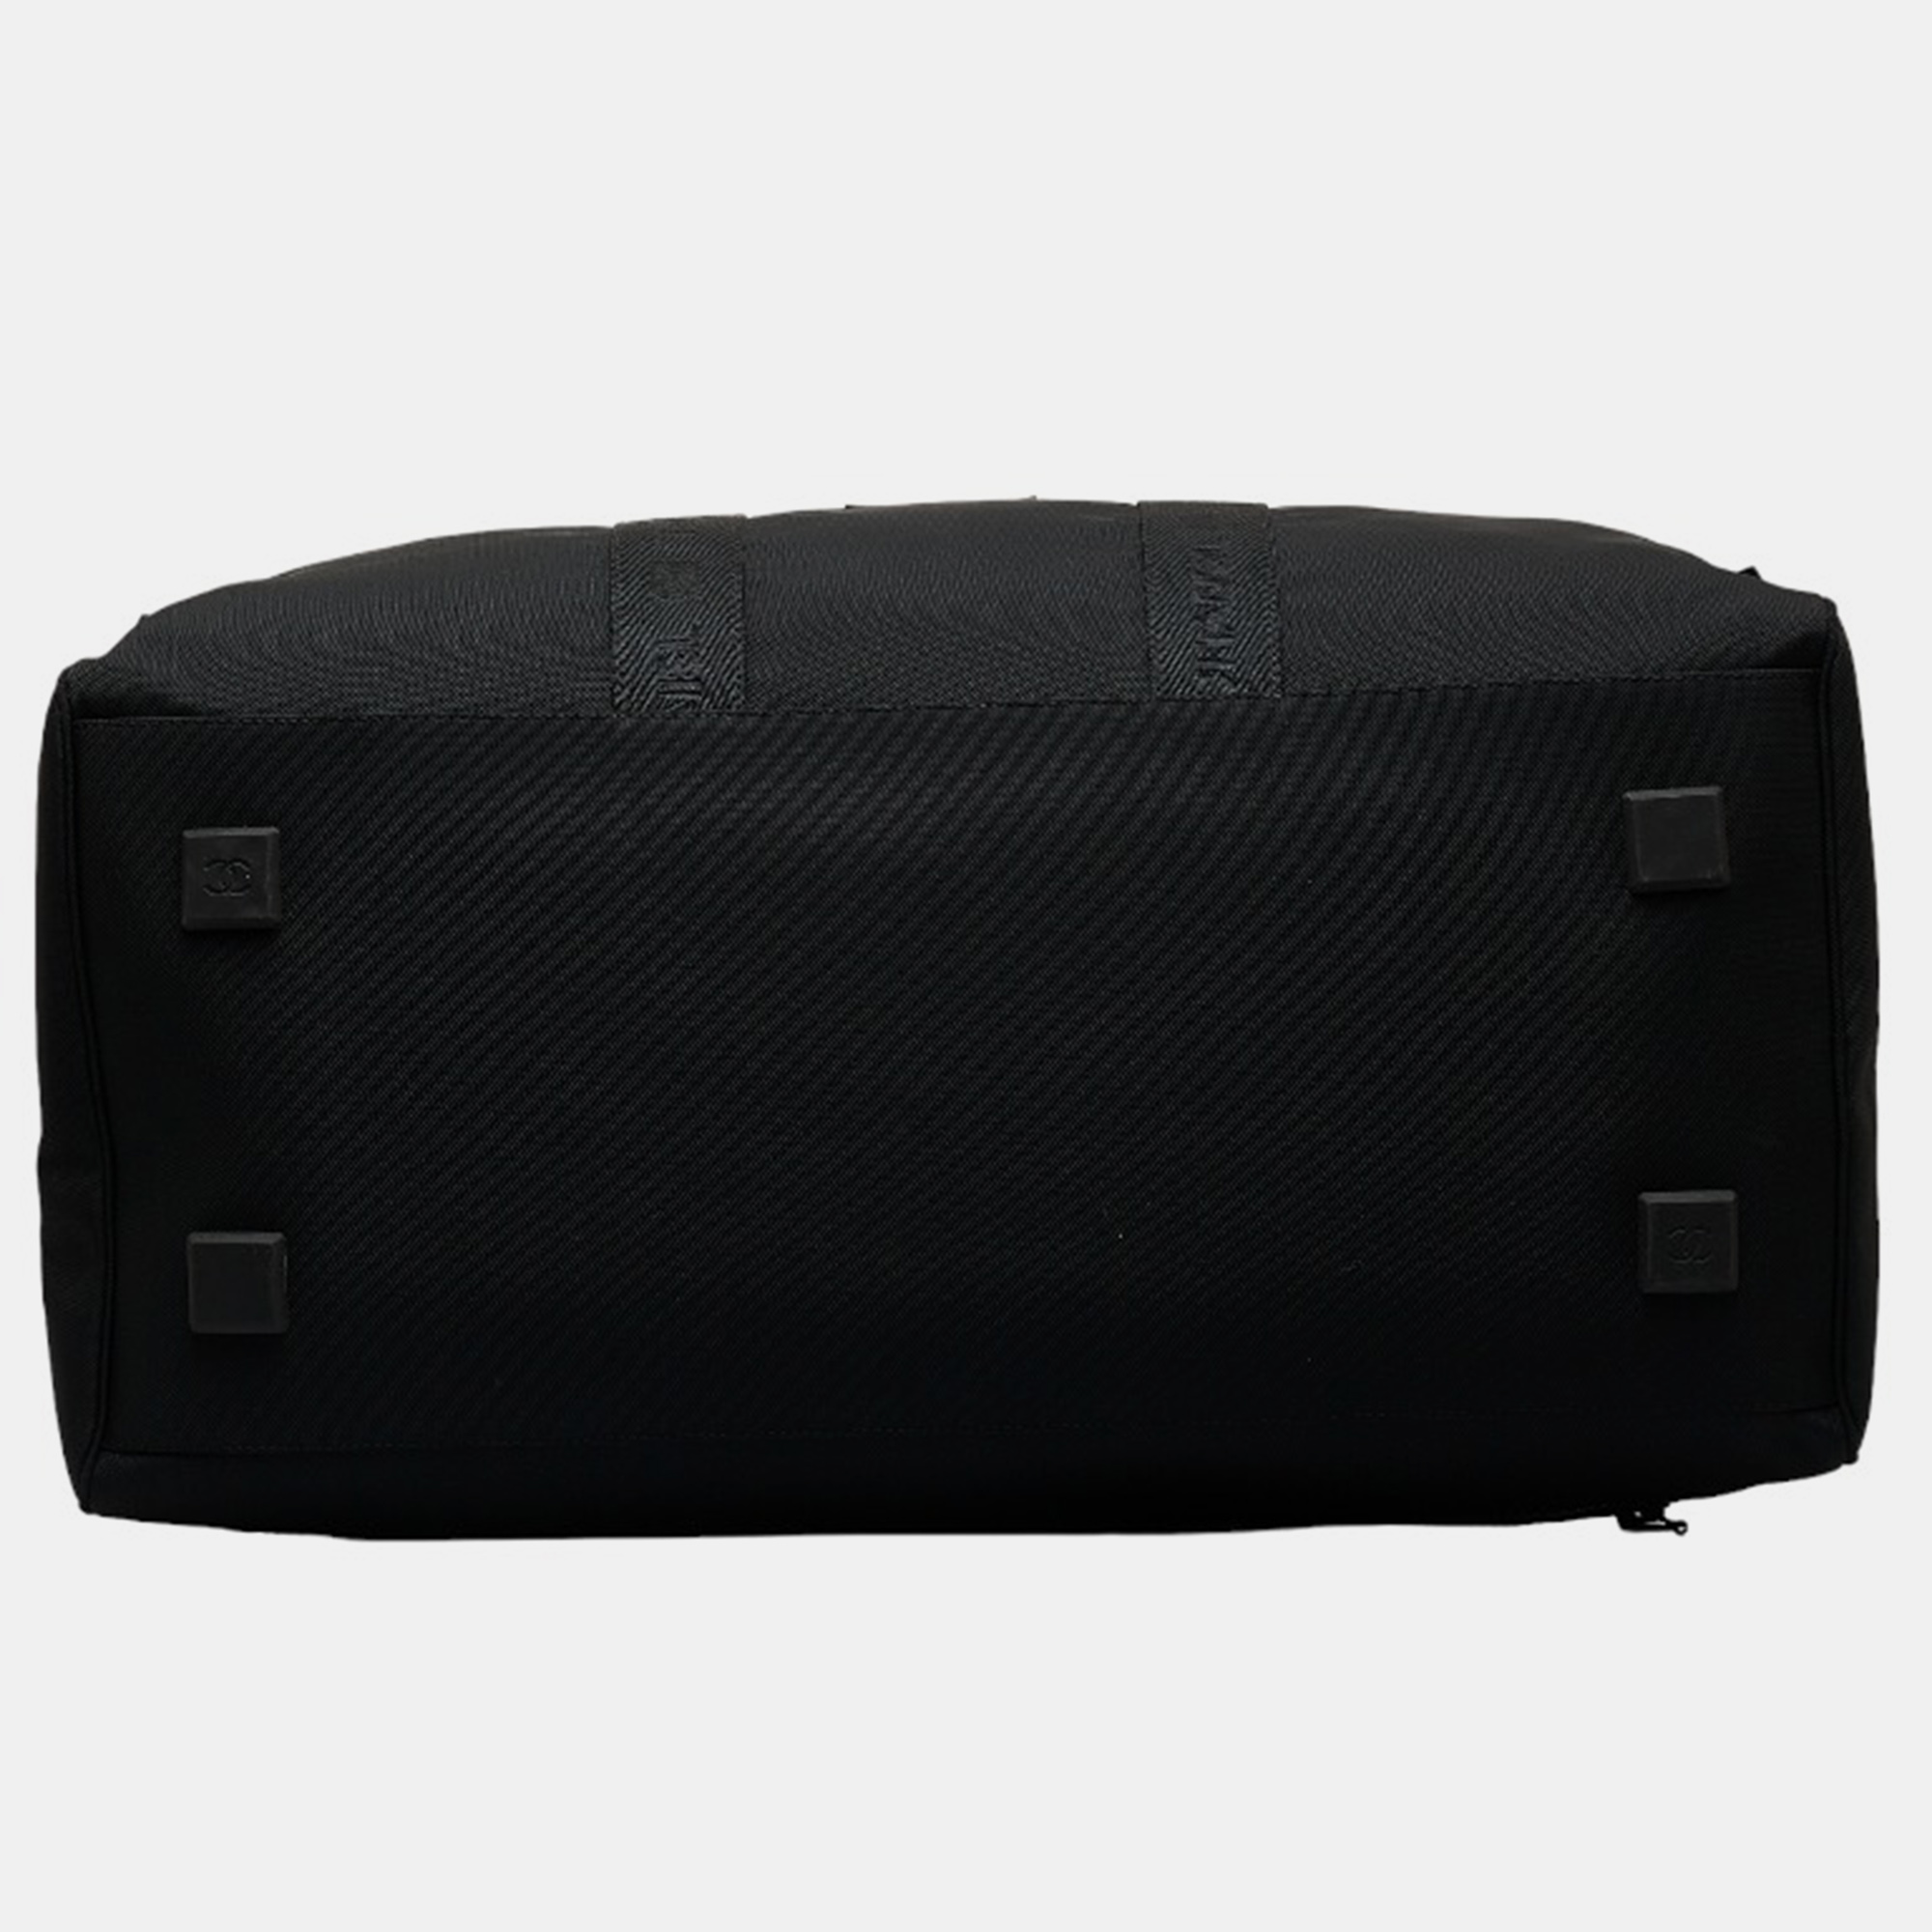 Chanel Black Canvas CC Sports Line Nylon Boston Bag